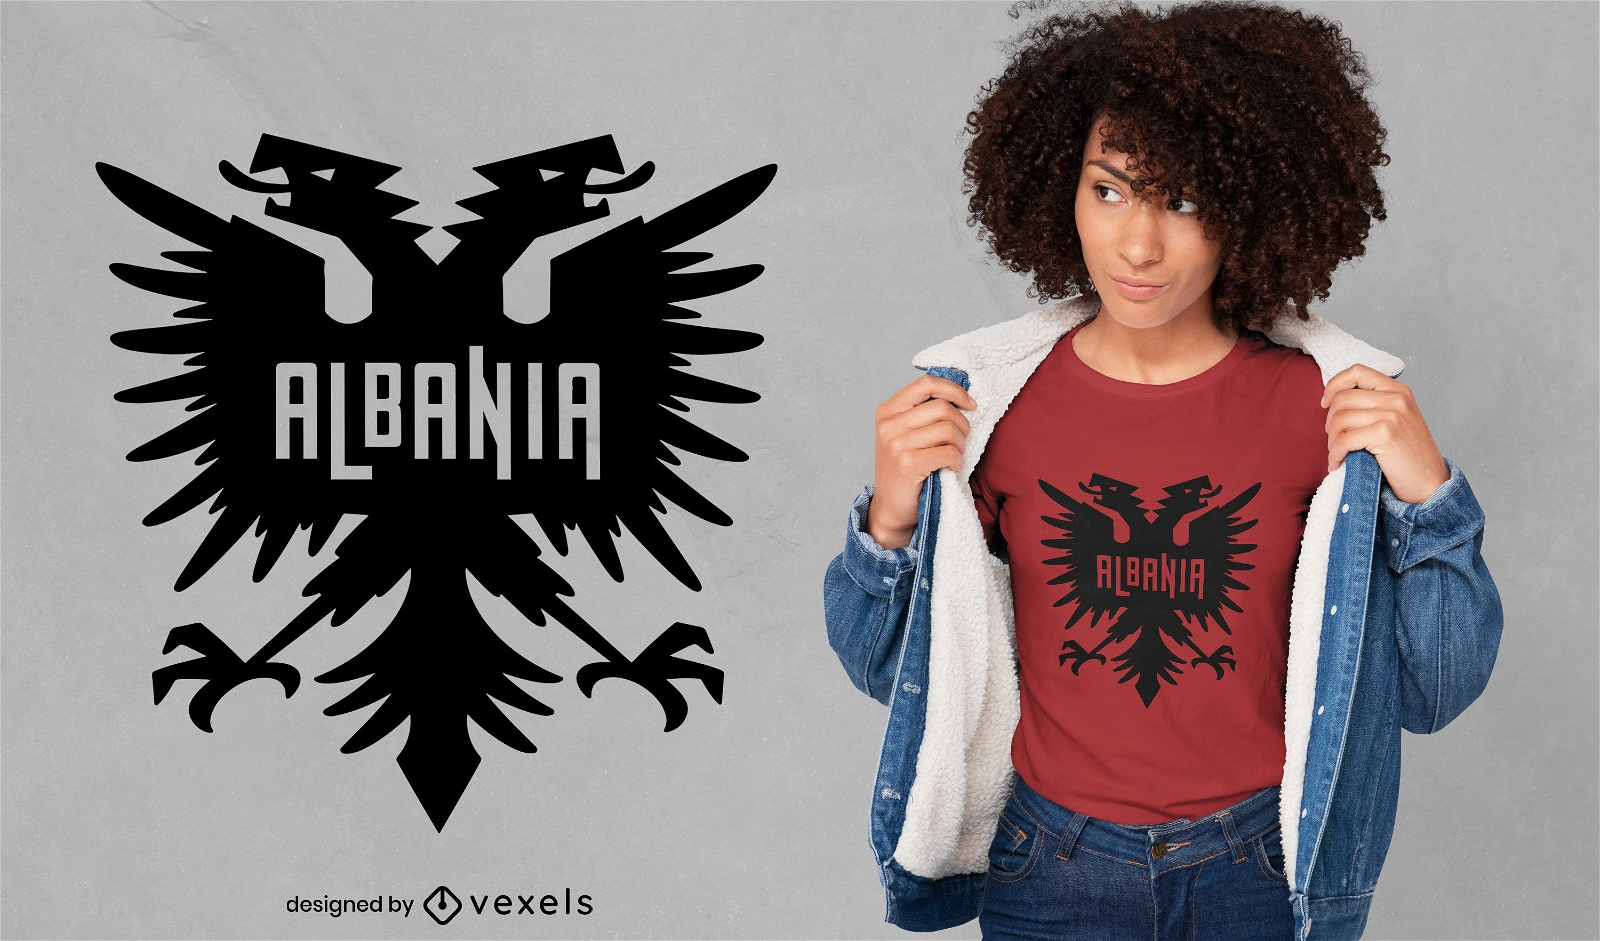 Albanian eagle flag silhouette t-shirt design